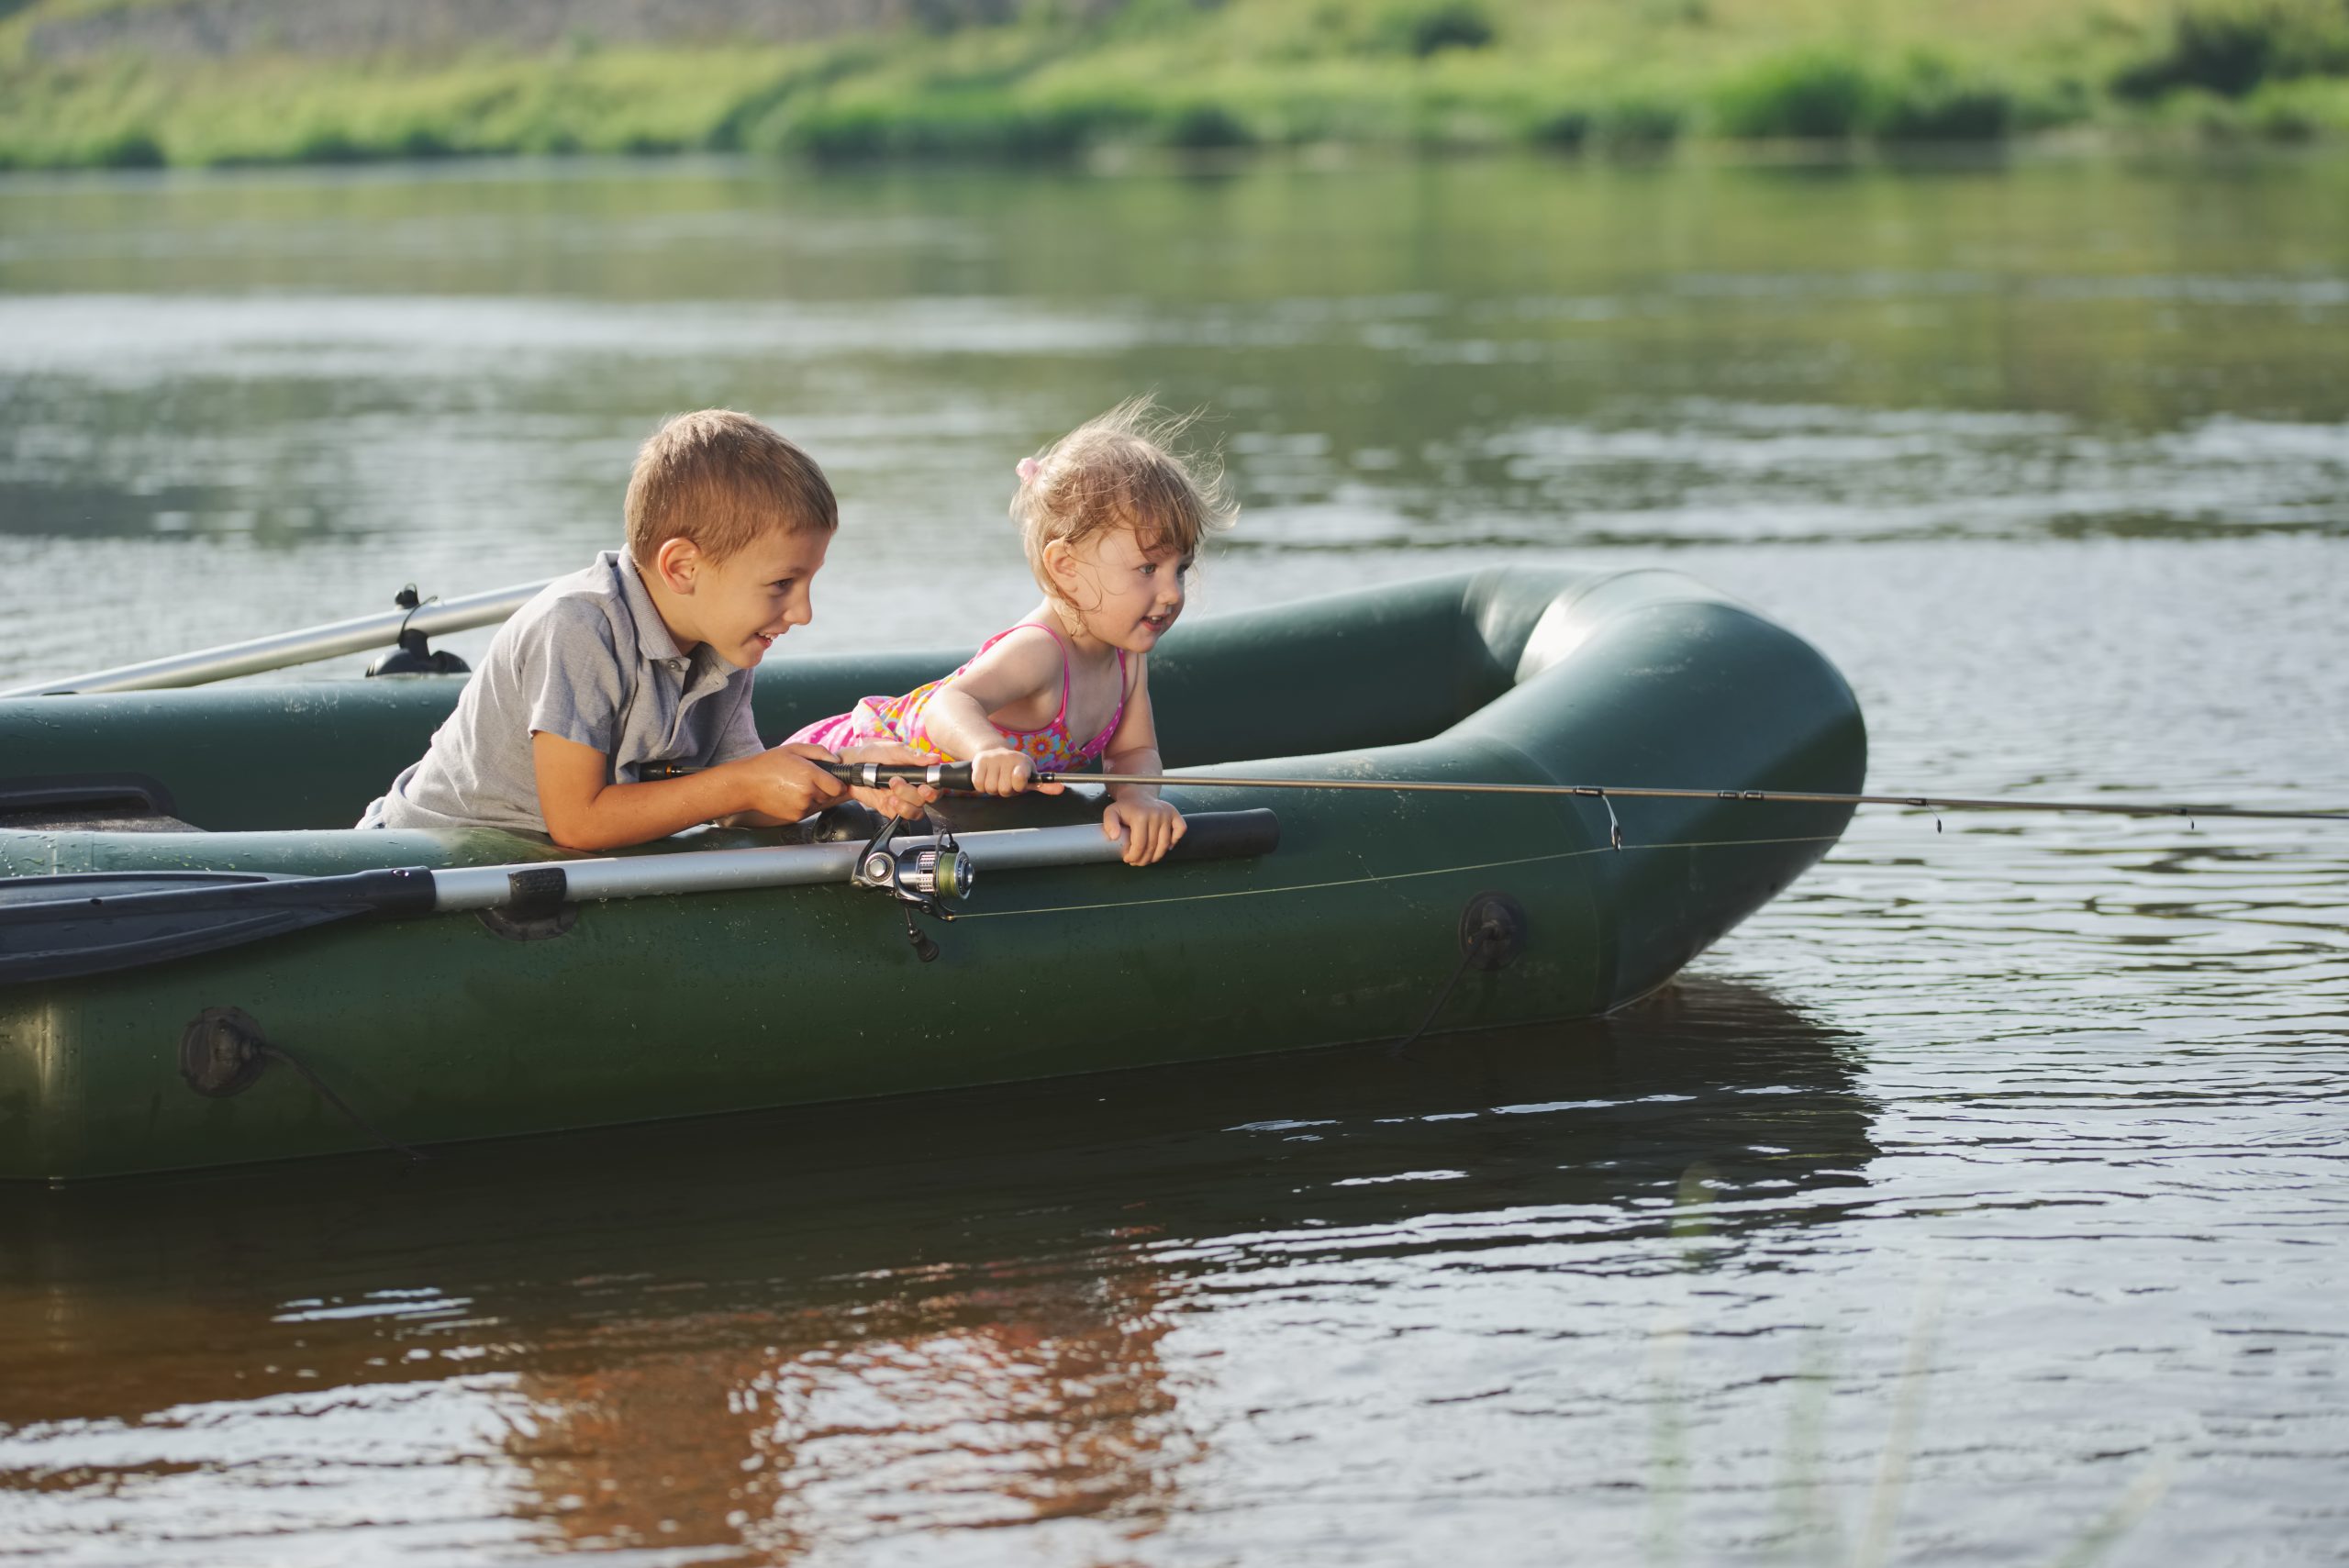 Children fishing in boat